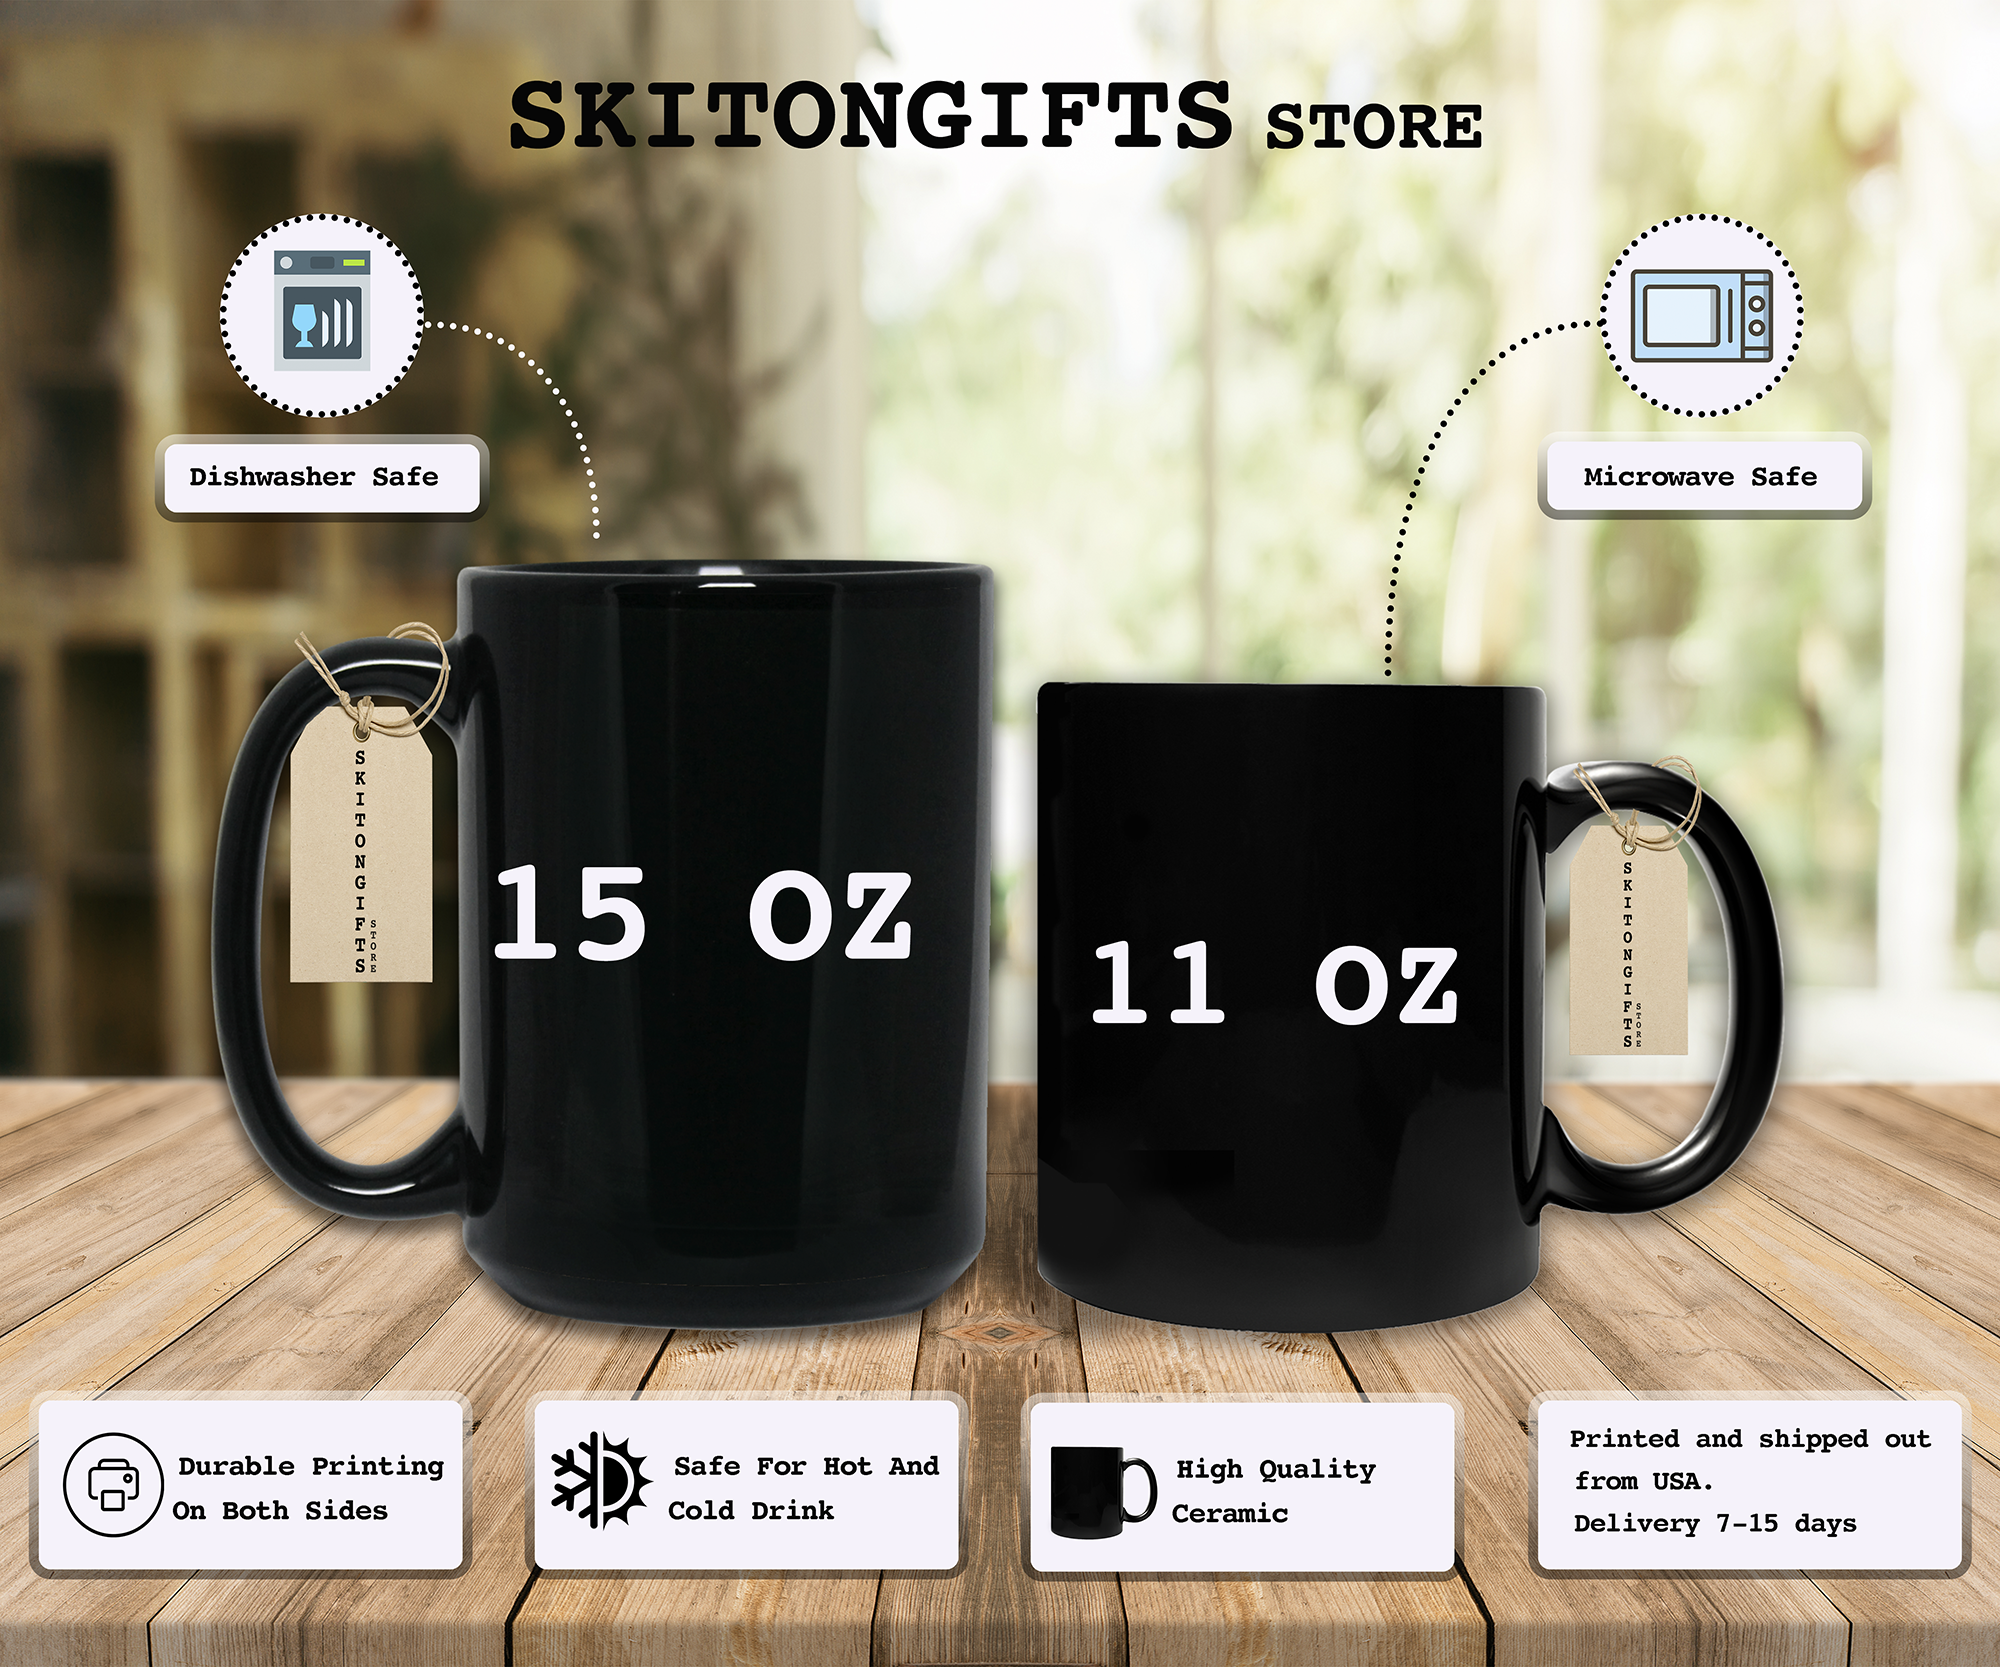 Skitongift Ceramic Novelty Coffee Mug Thanksgiving Pregnancy Mug One More Reason To Be Thankful This Year